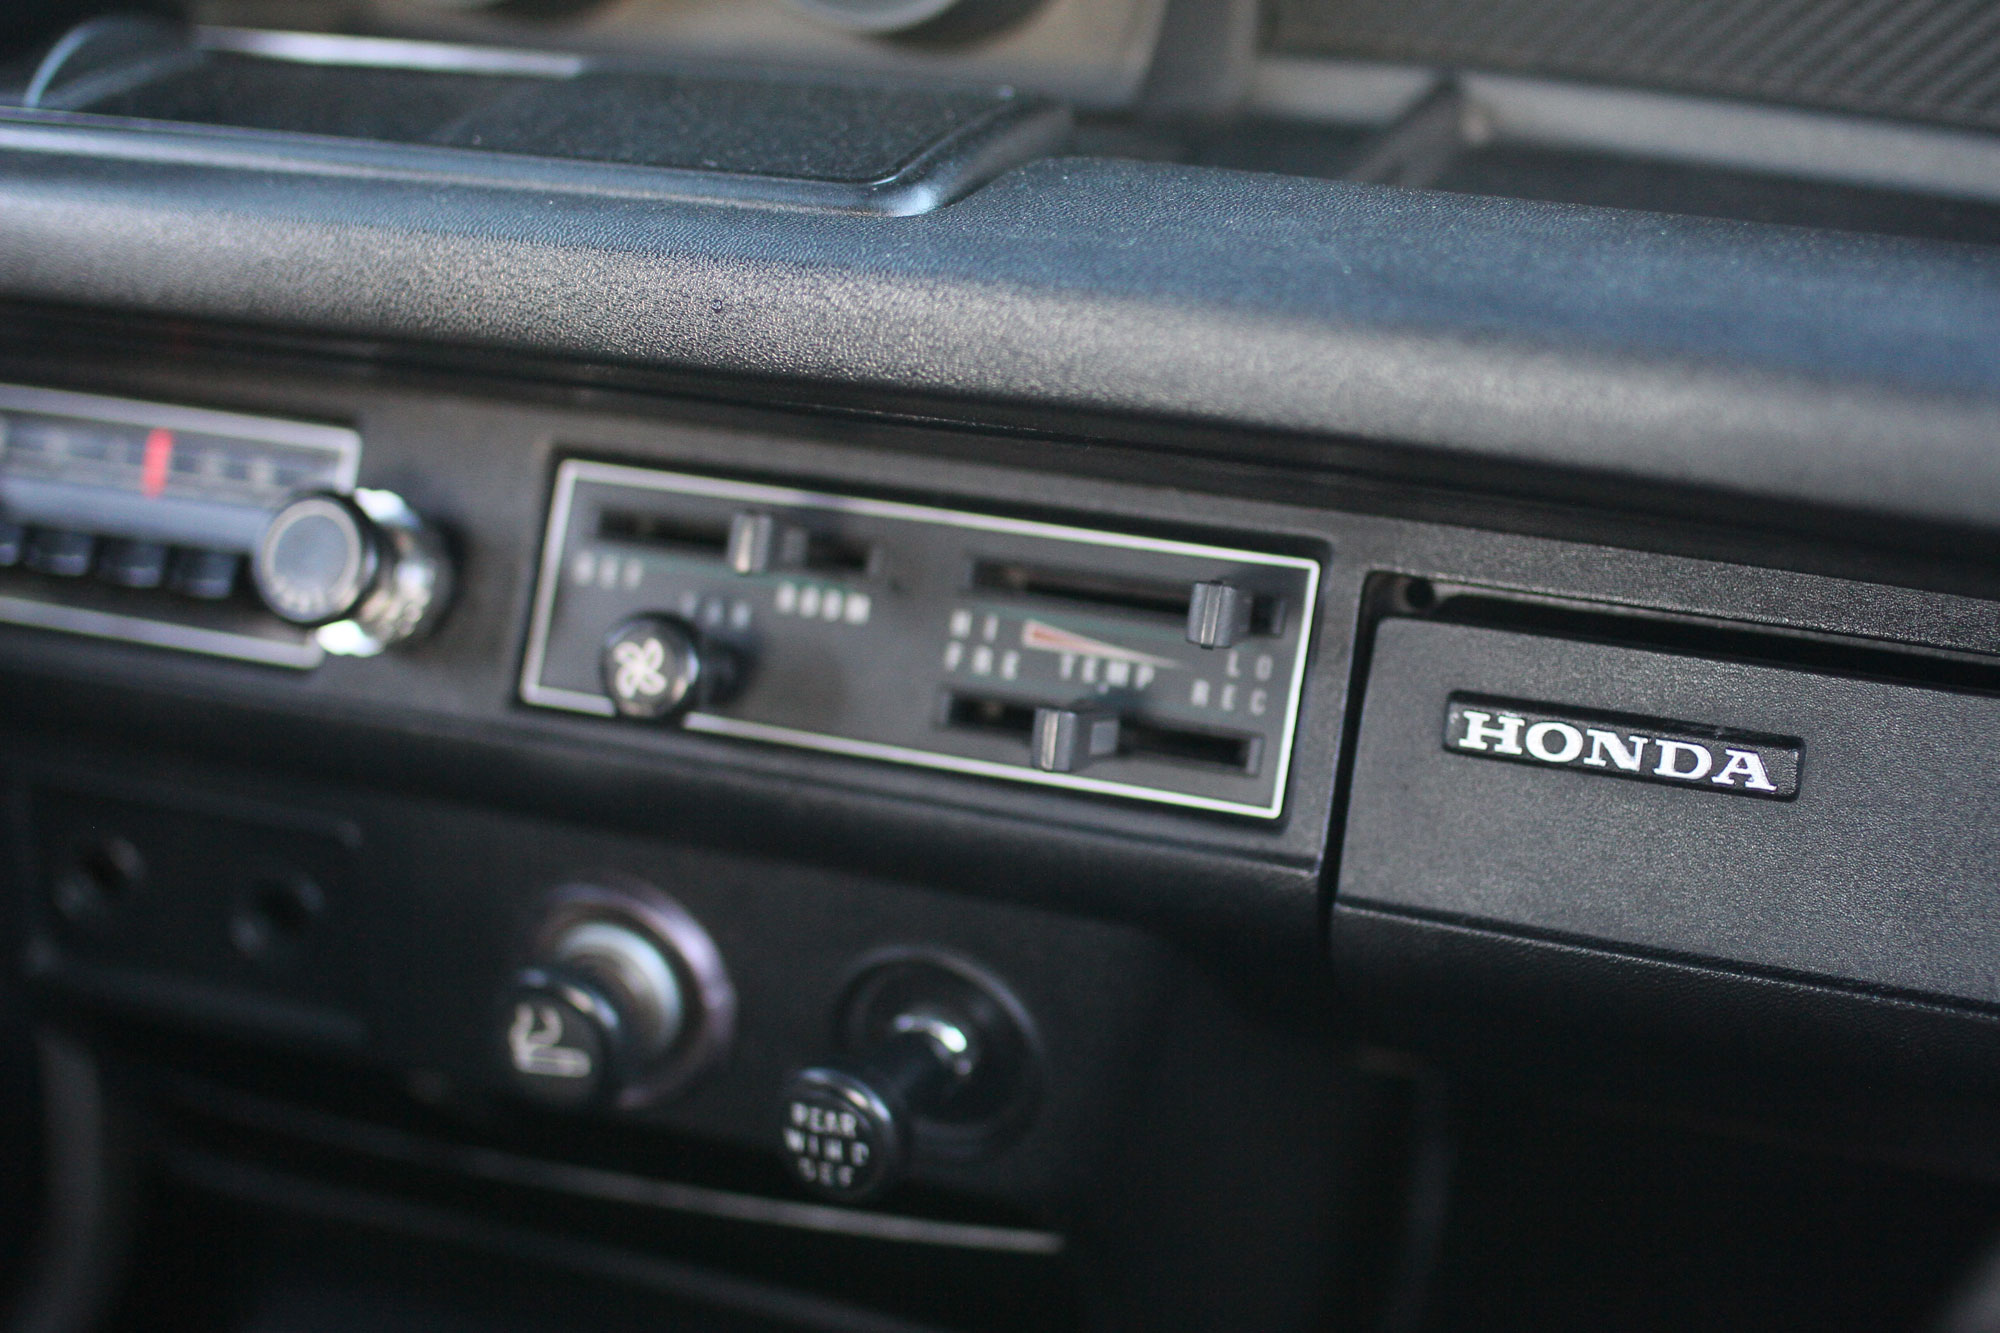 Honda Sticker in the dashboard. 